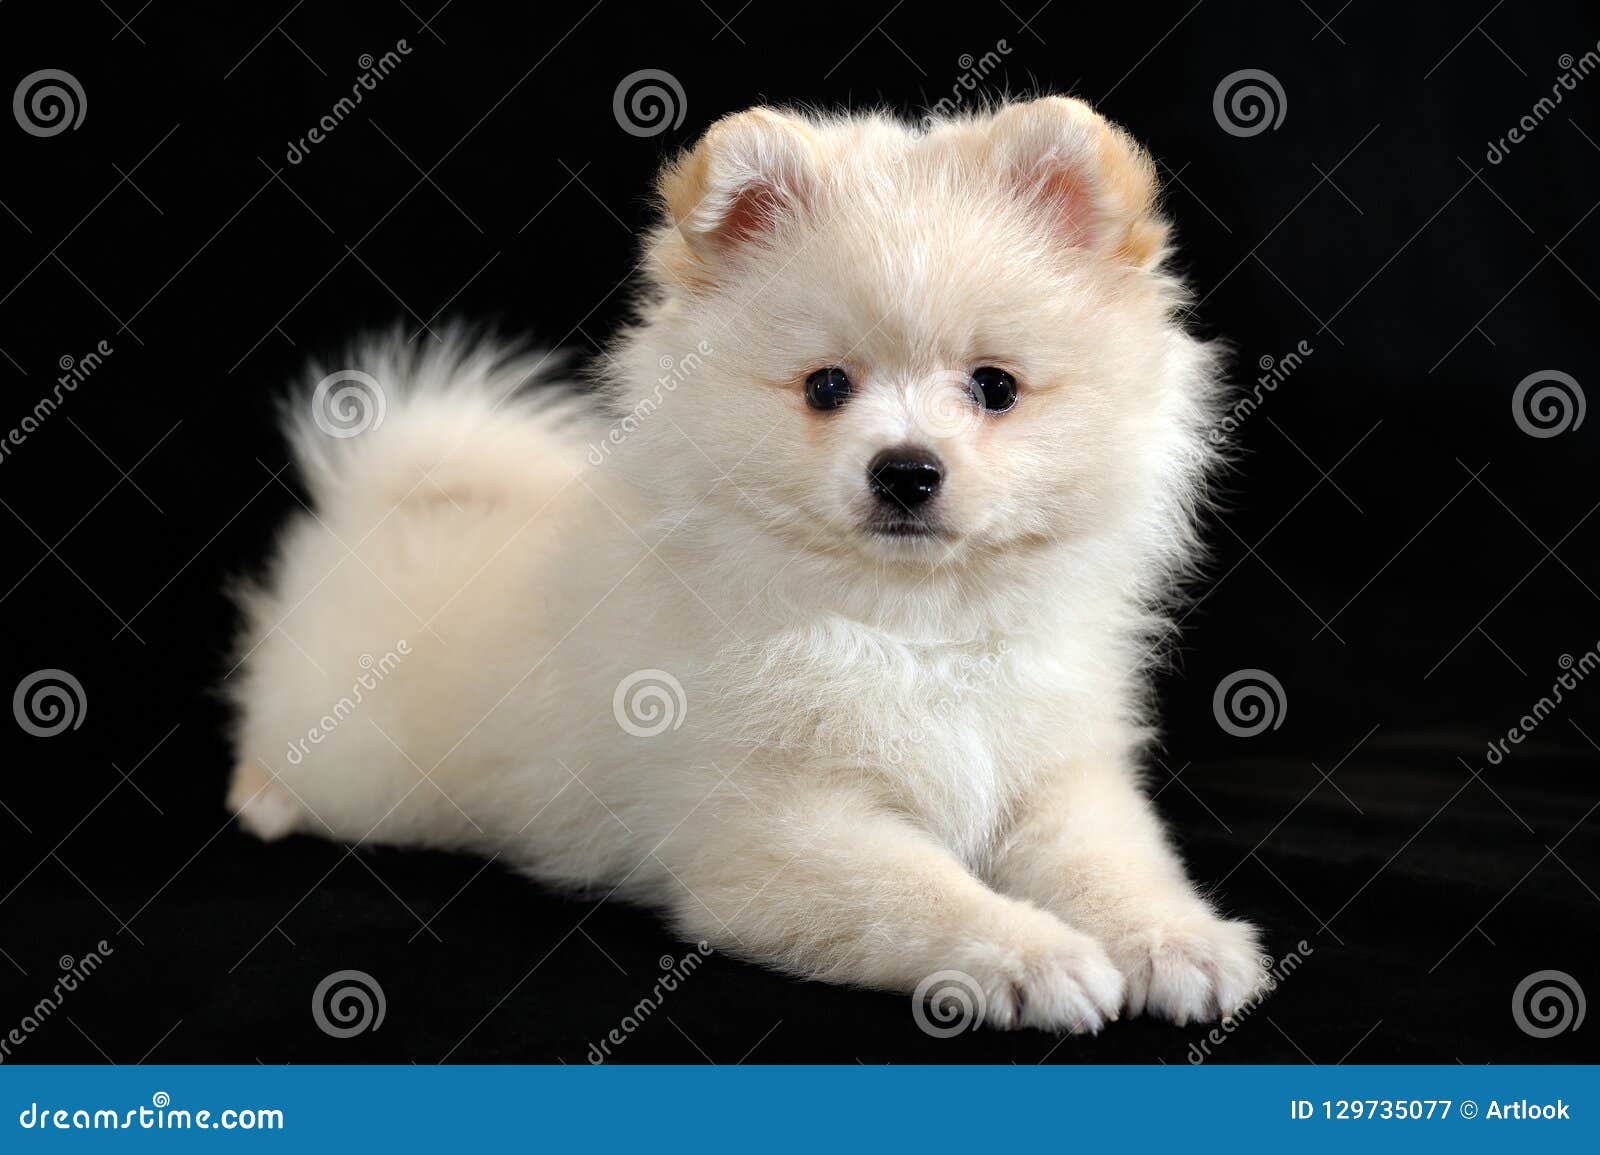 Cream Cute Pomeranian Spitz Puppy Stock Image Image of